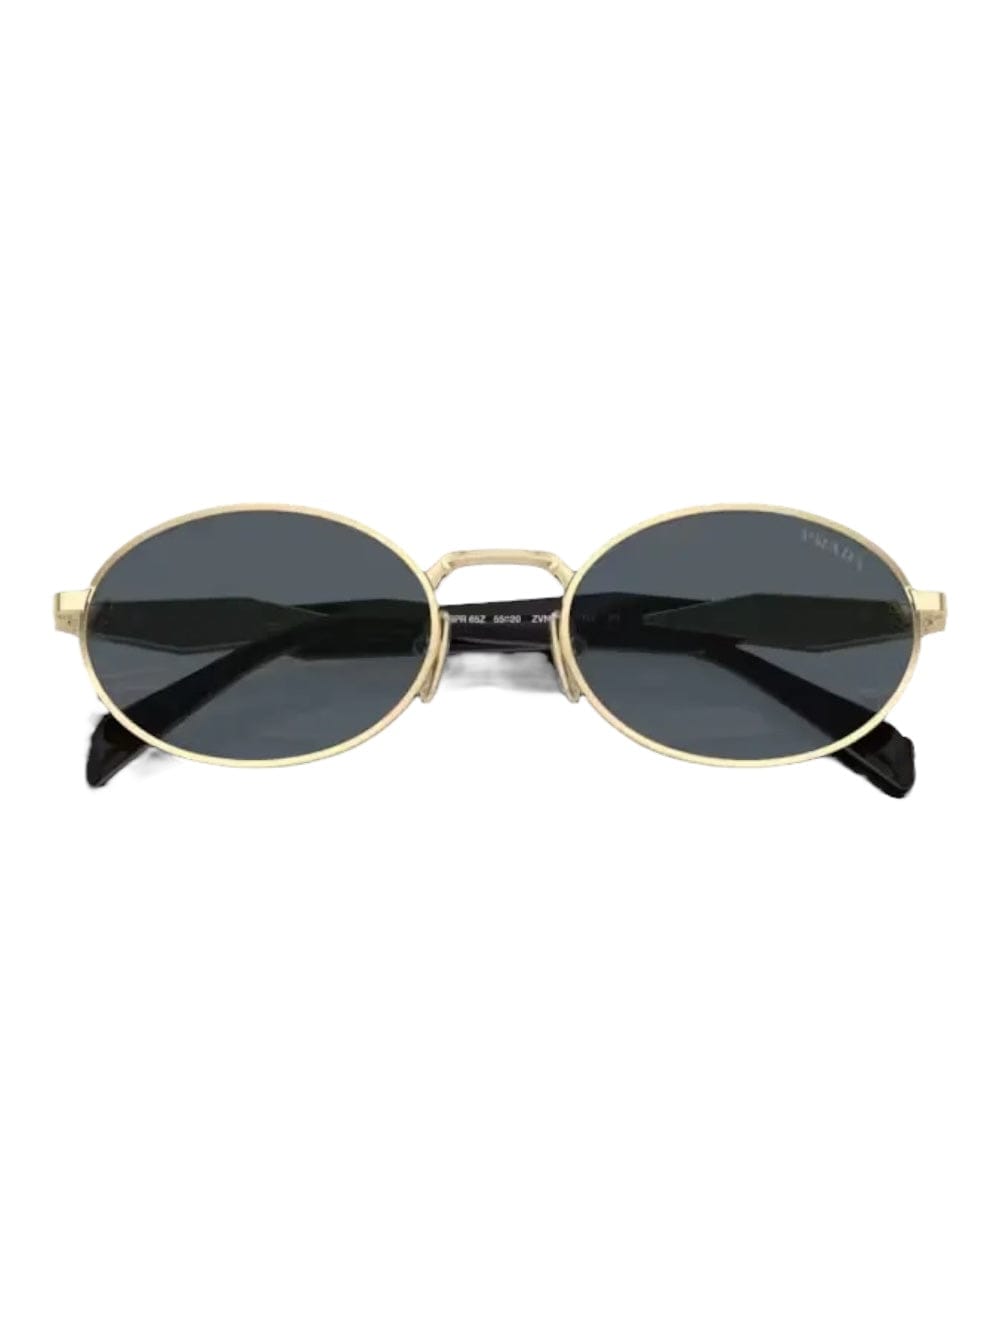 Opr 65zs - Black Sunglasses